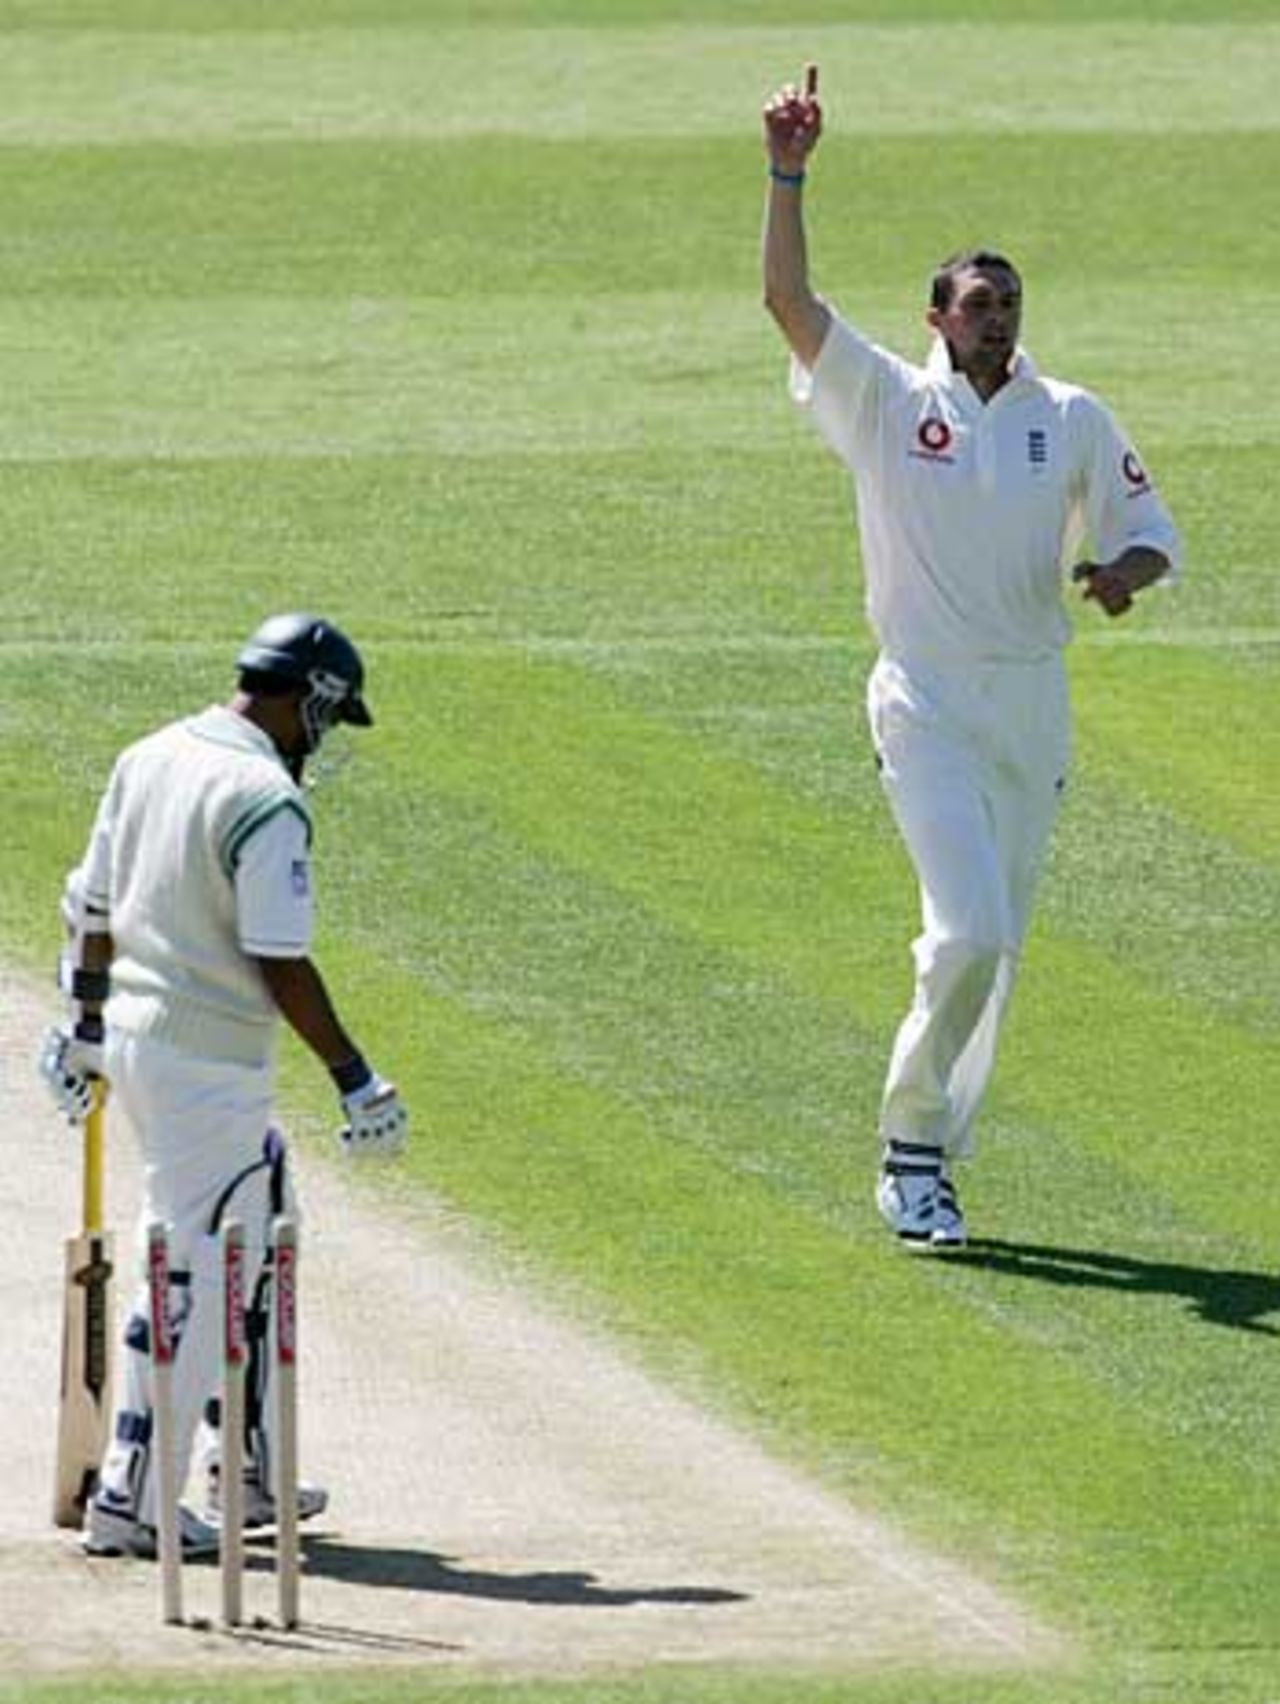 Steve Harmison celebrates bowling Habibul Bashar, England v Bangladesh, 2nd Test, Chester-le-Street, June 3